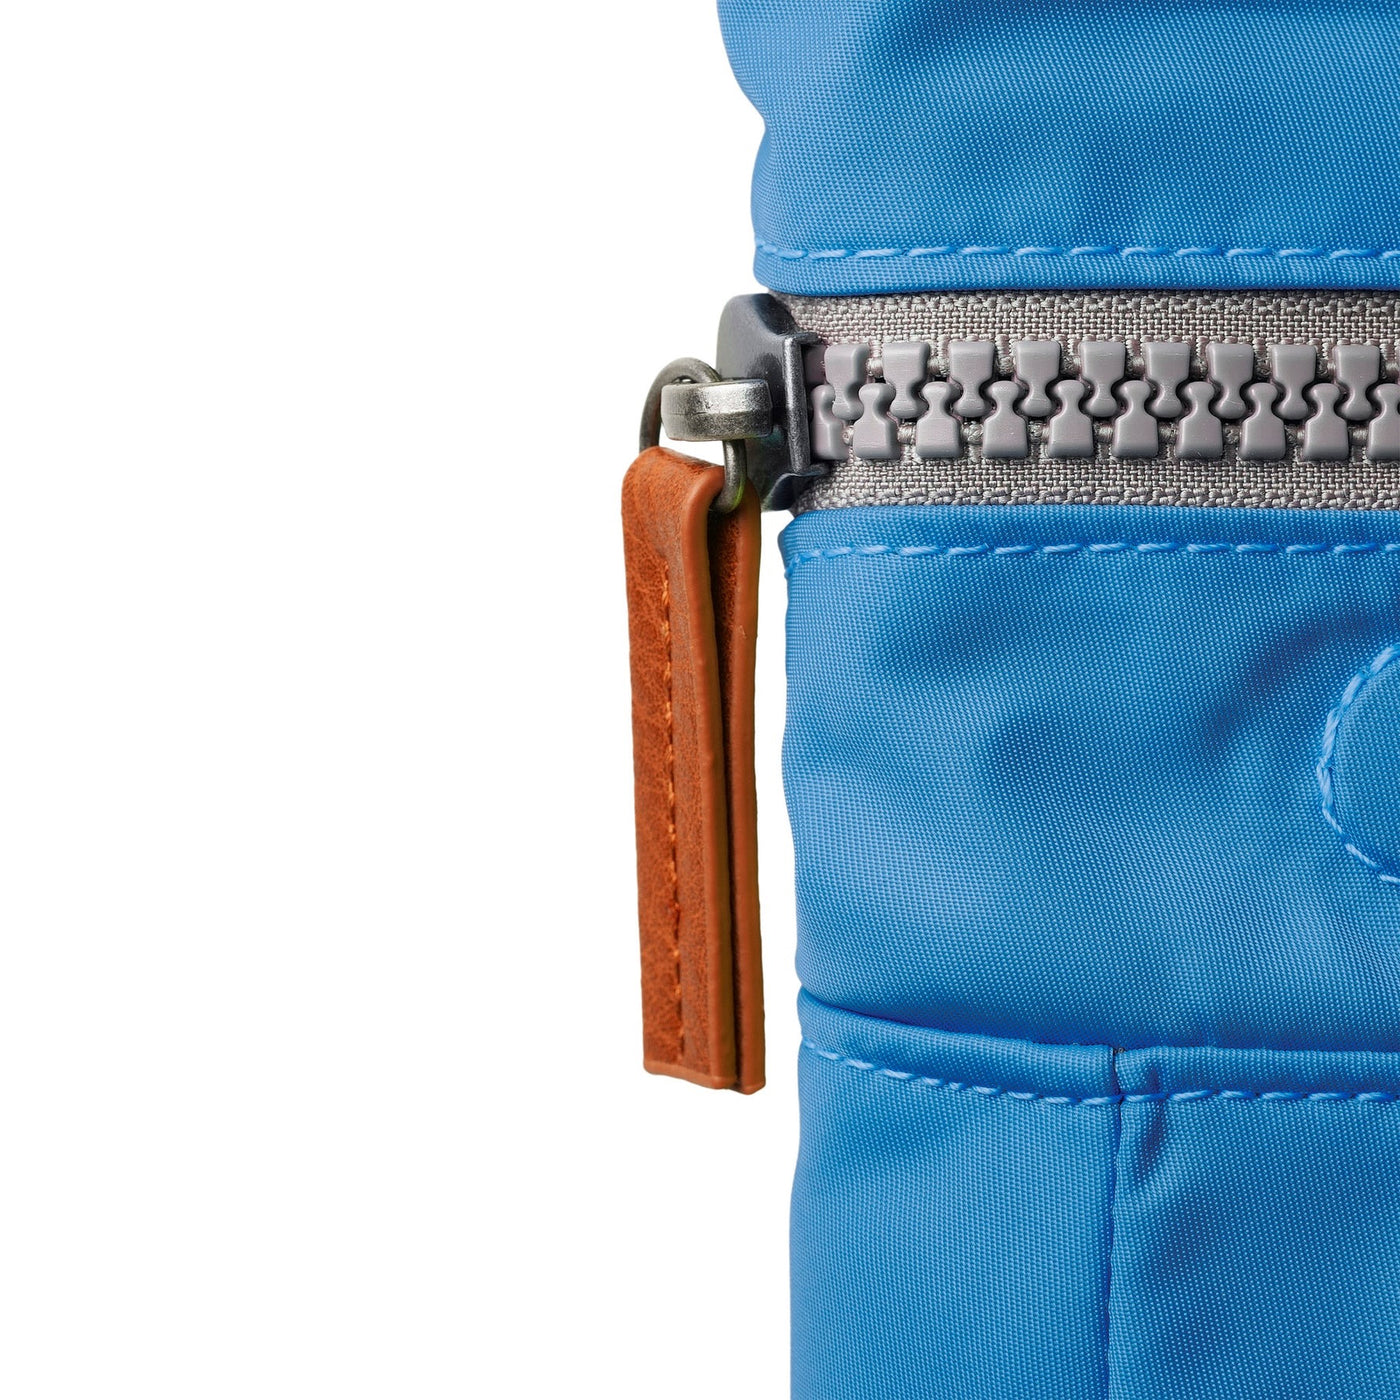 Roka Canfield B Backpack-Recycled Nylon - MEDIUM - Seaport Blue